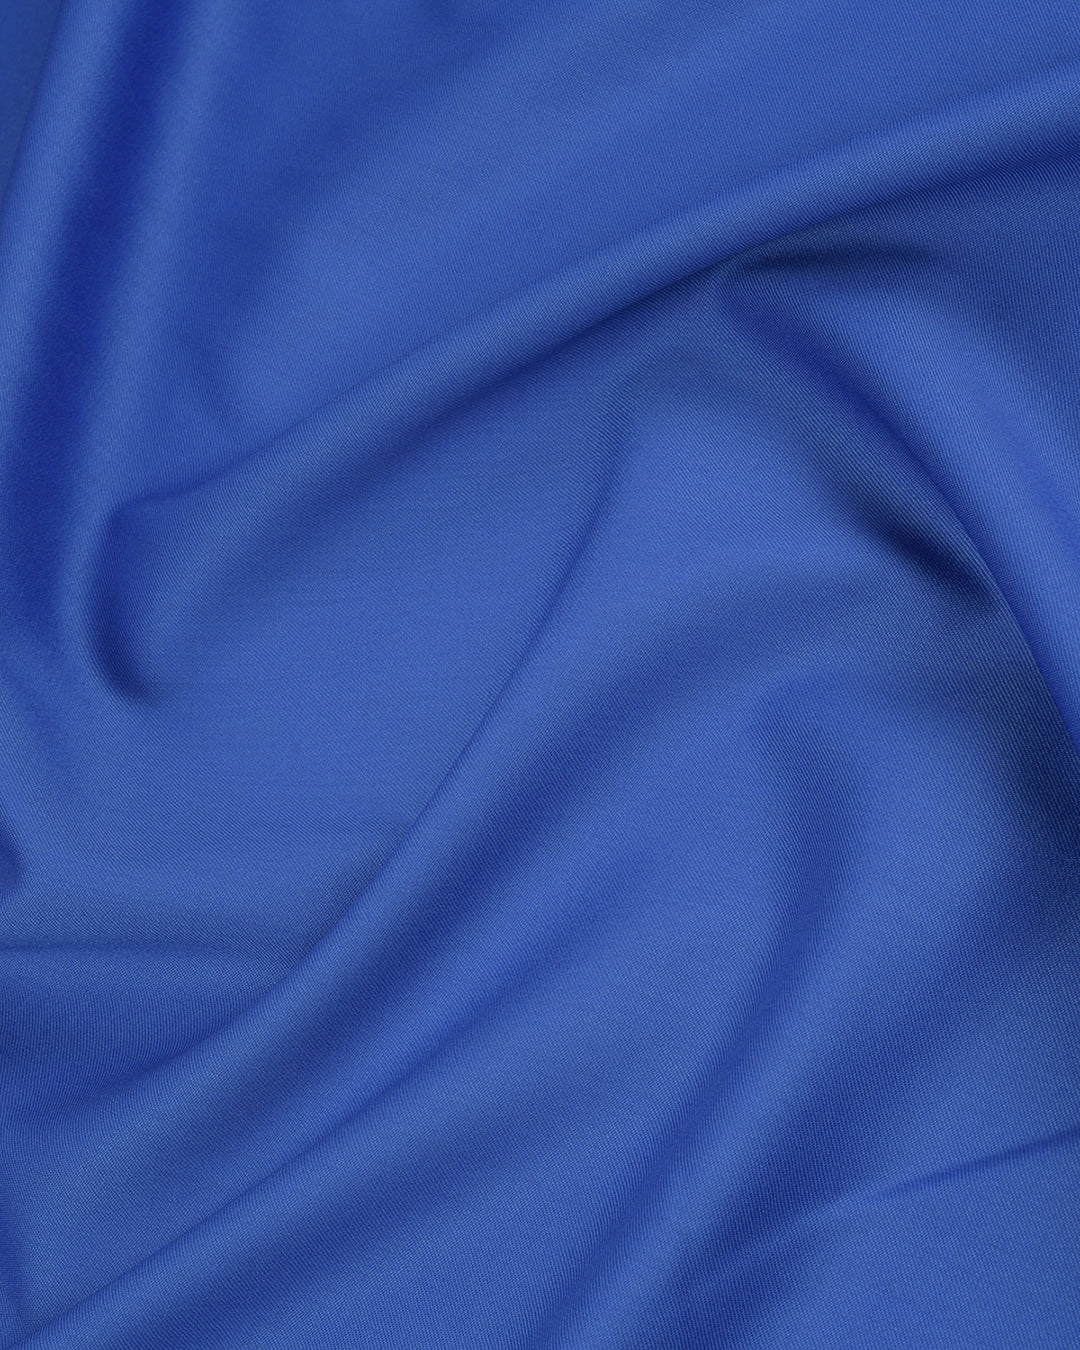 Gurkha Pant in VBC 100% Wool: Royal Blue Twill